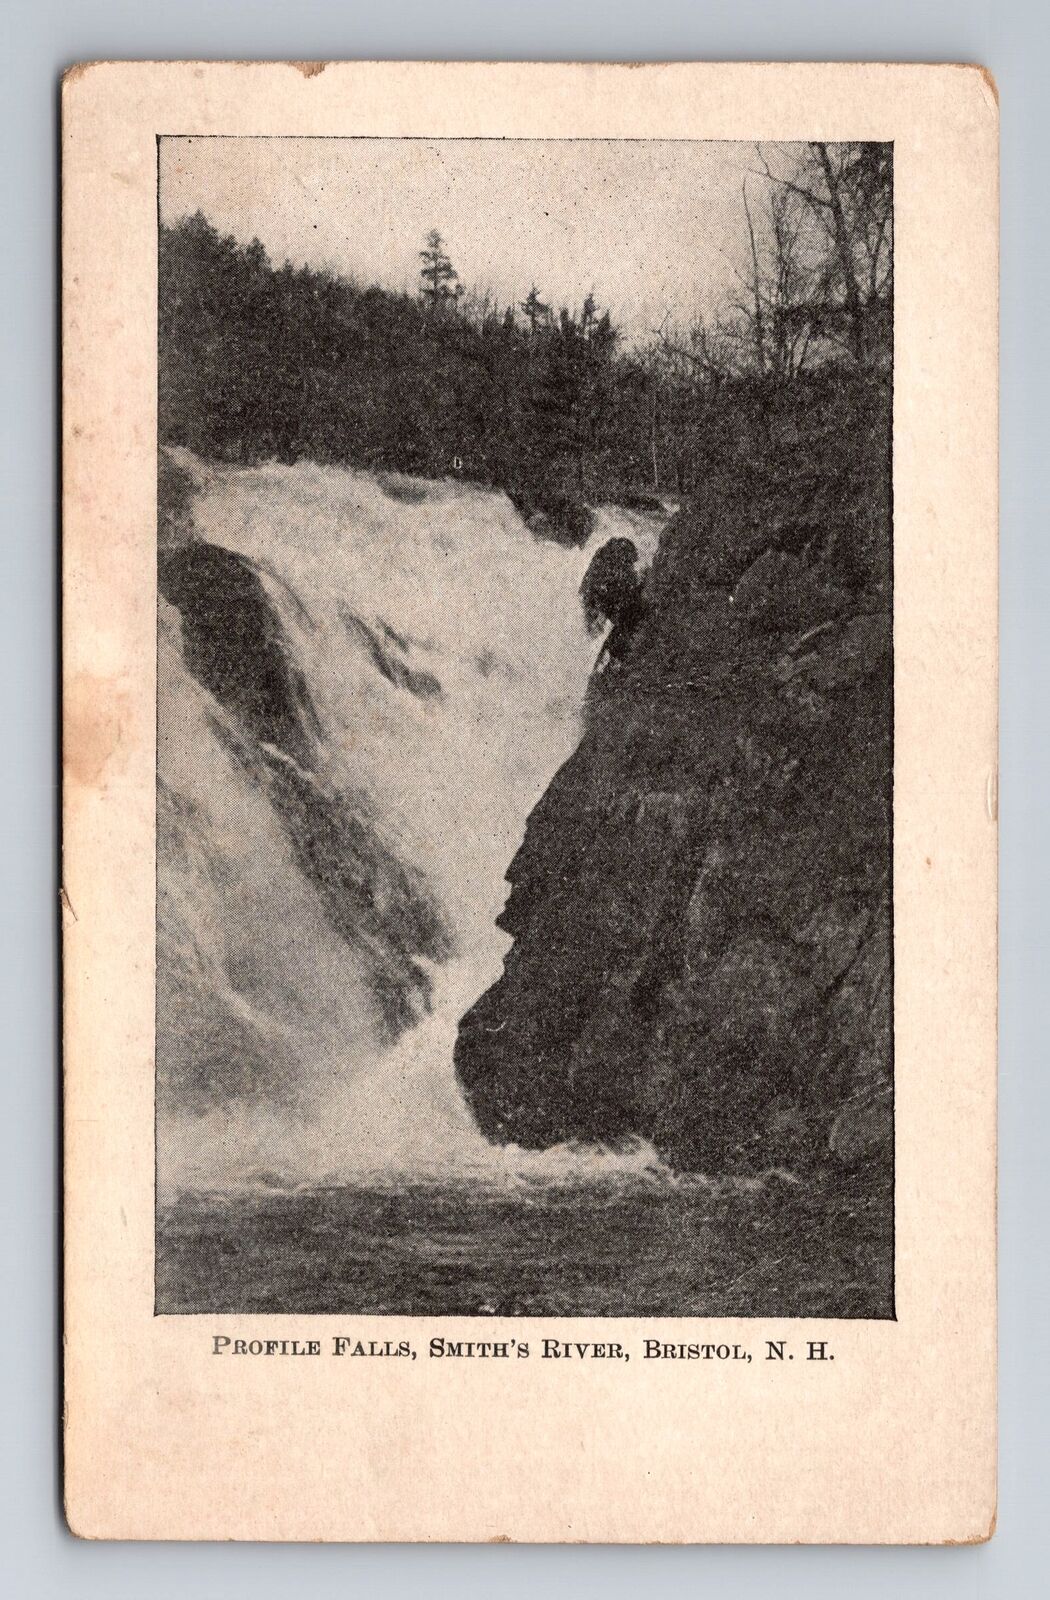 Bristol NH-New Hampshire Profile Falls, Smith's River, Antique, Vintage Postcard